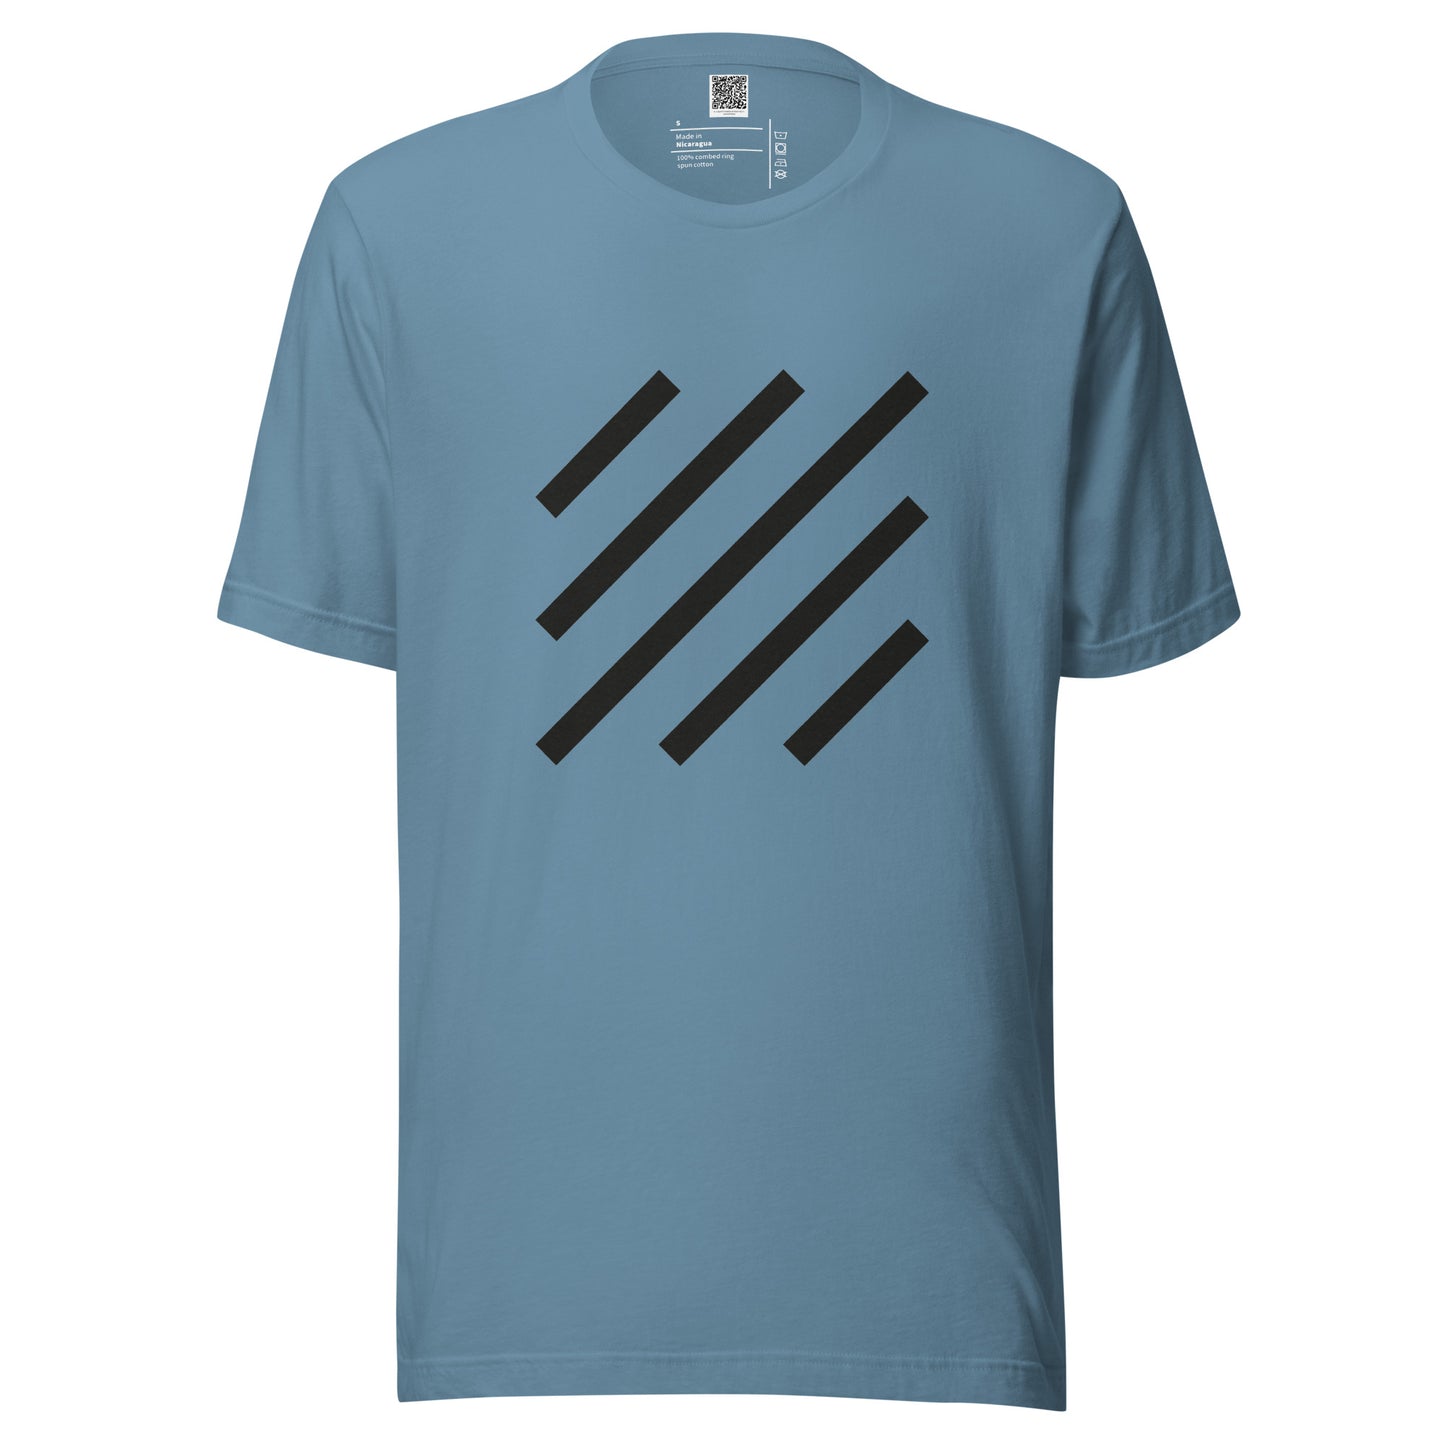 Unisex t-shirt - Decal Black